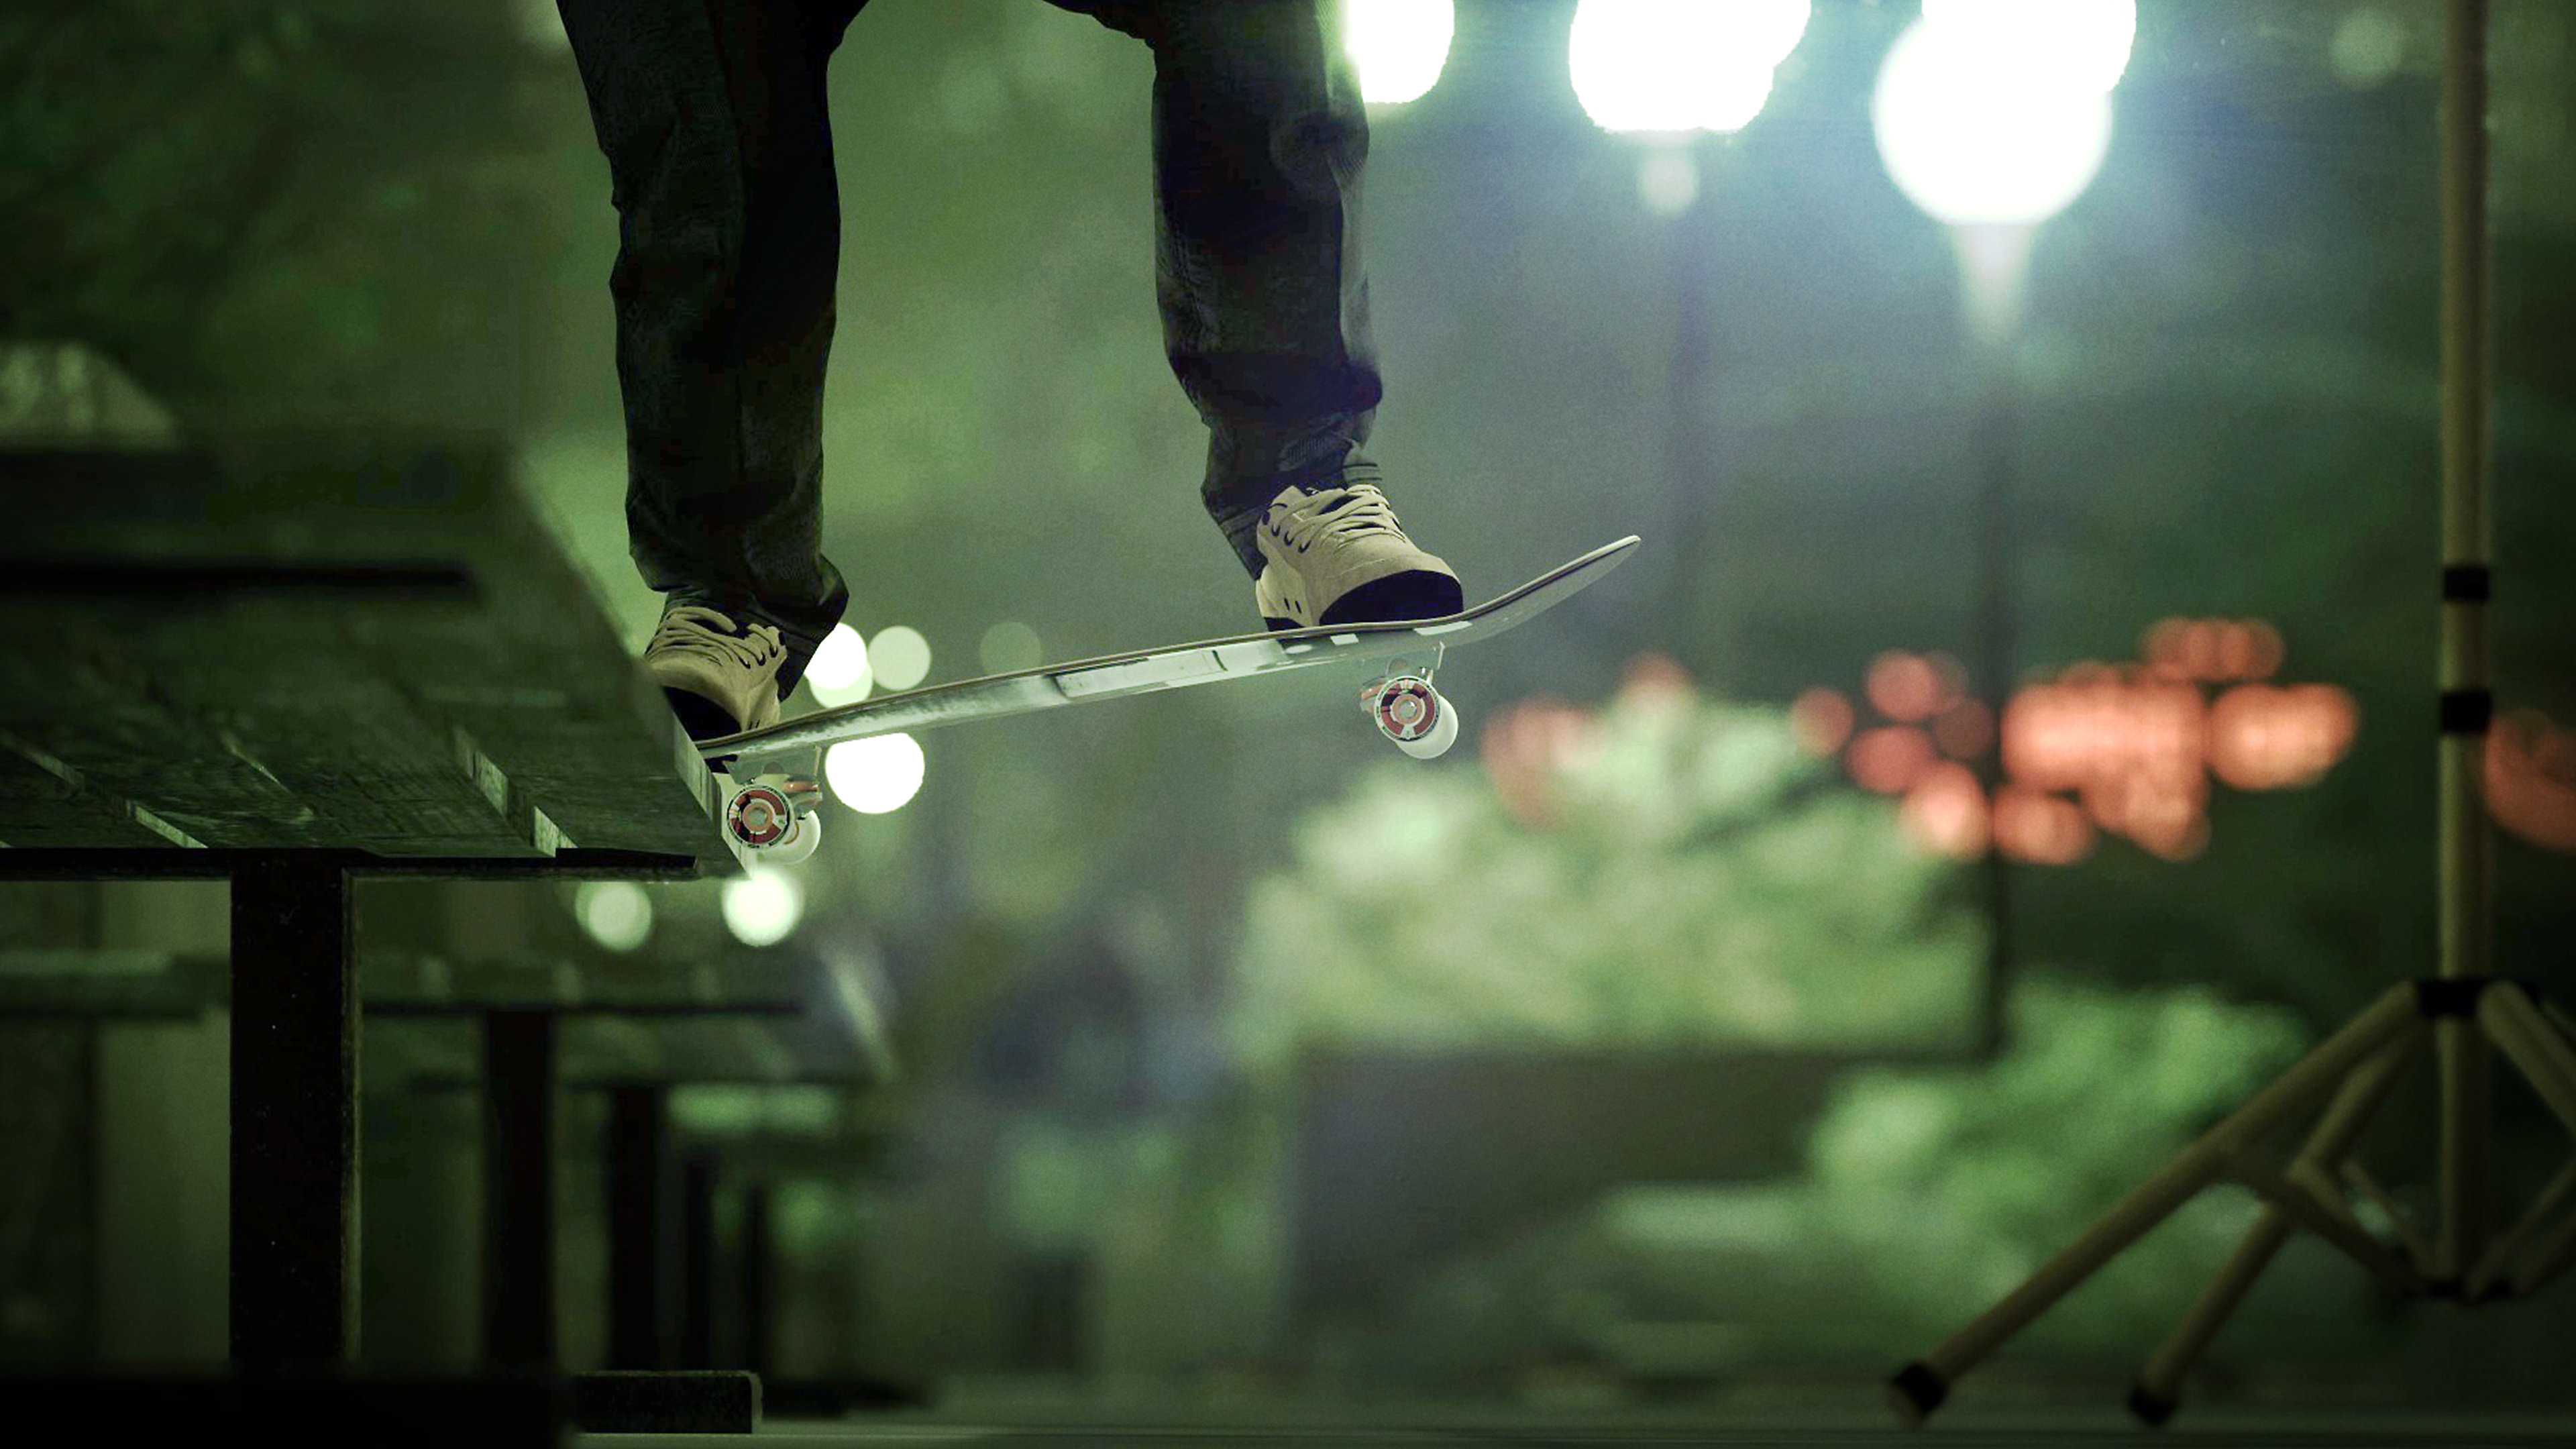 Session: Skate Sim-screenshot van een skater die op een bankje grindt